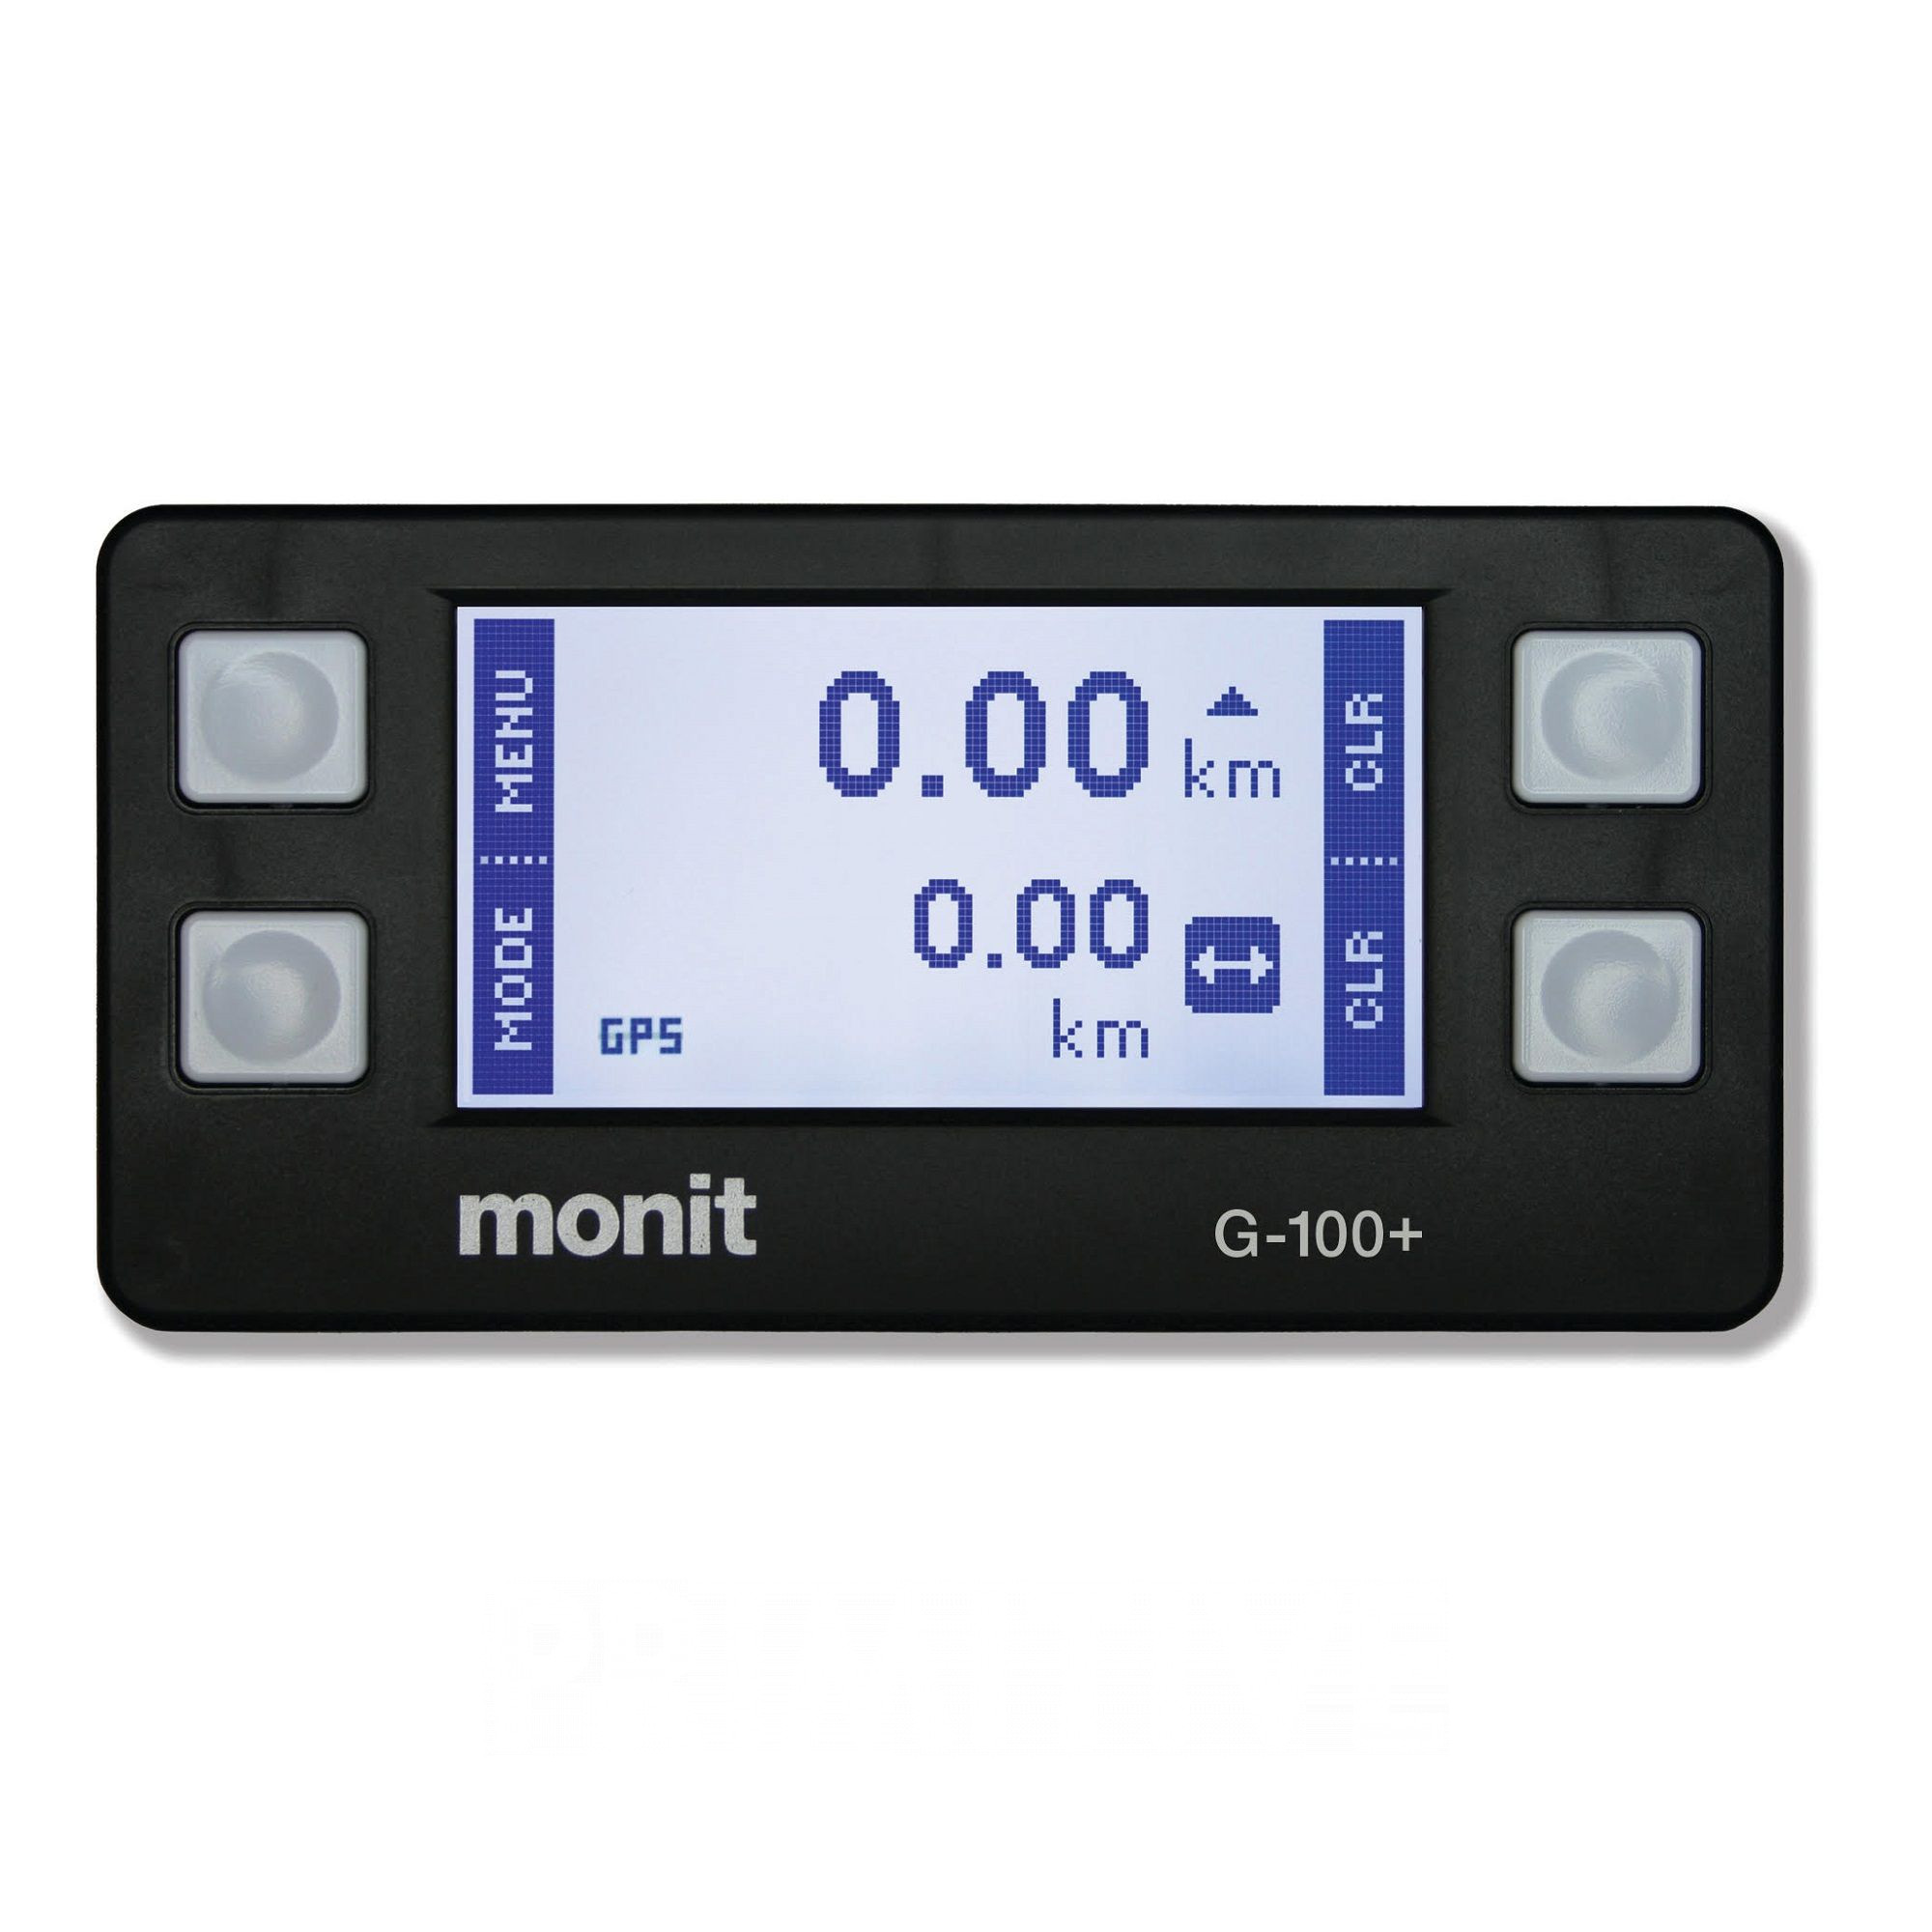 Image for Monit G-100+ GPS Rally Computer